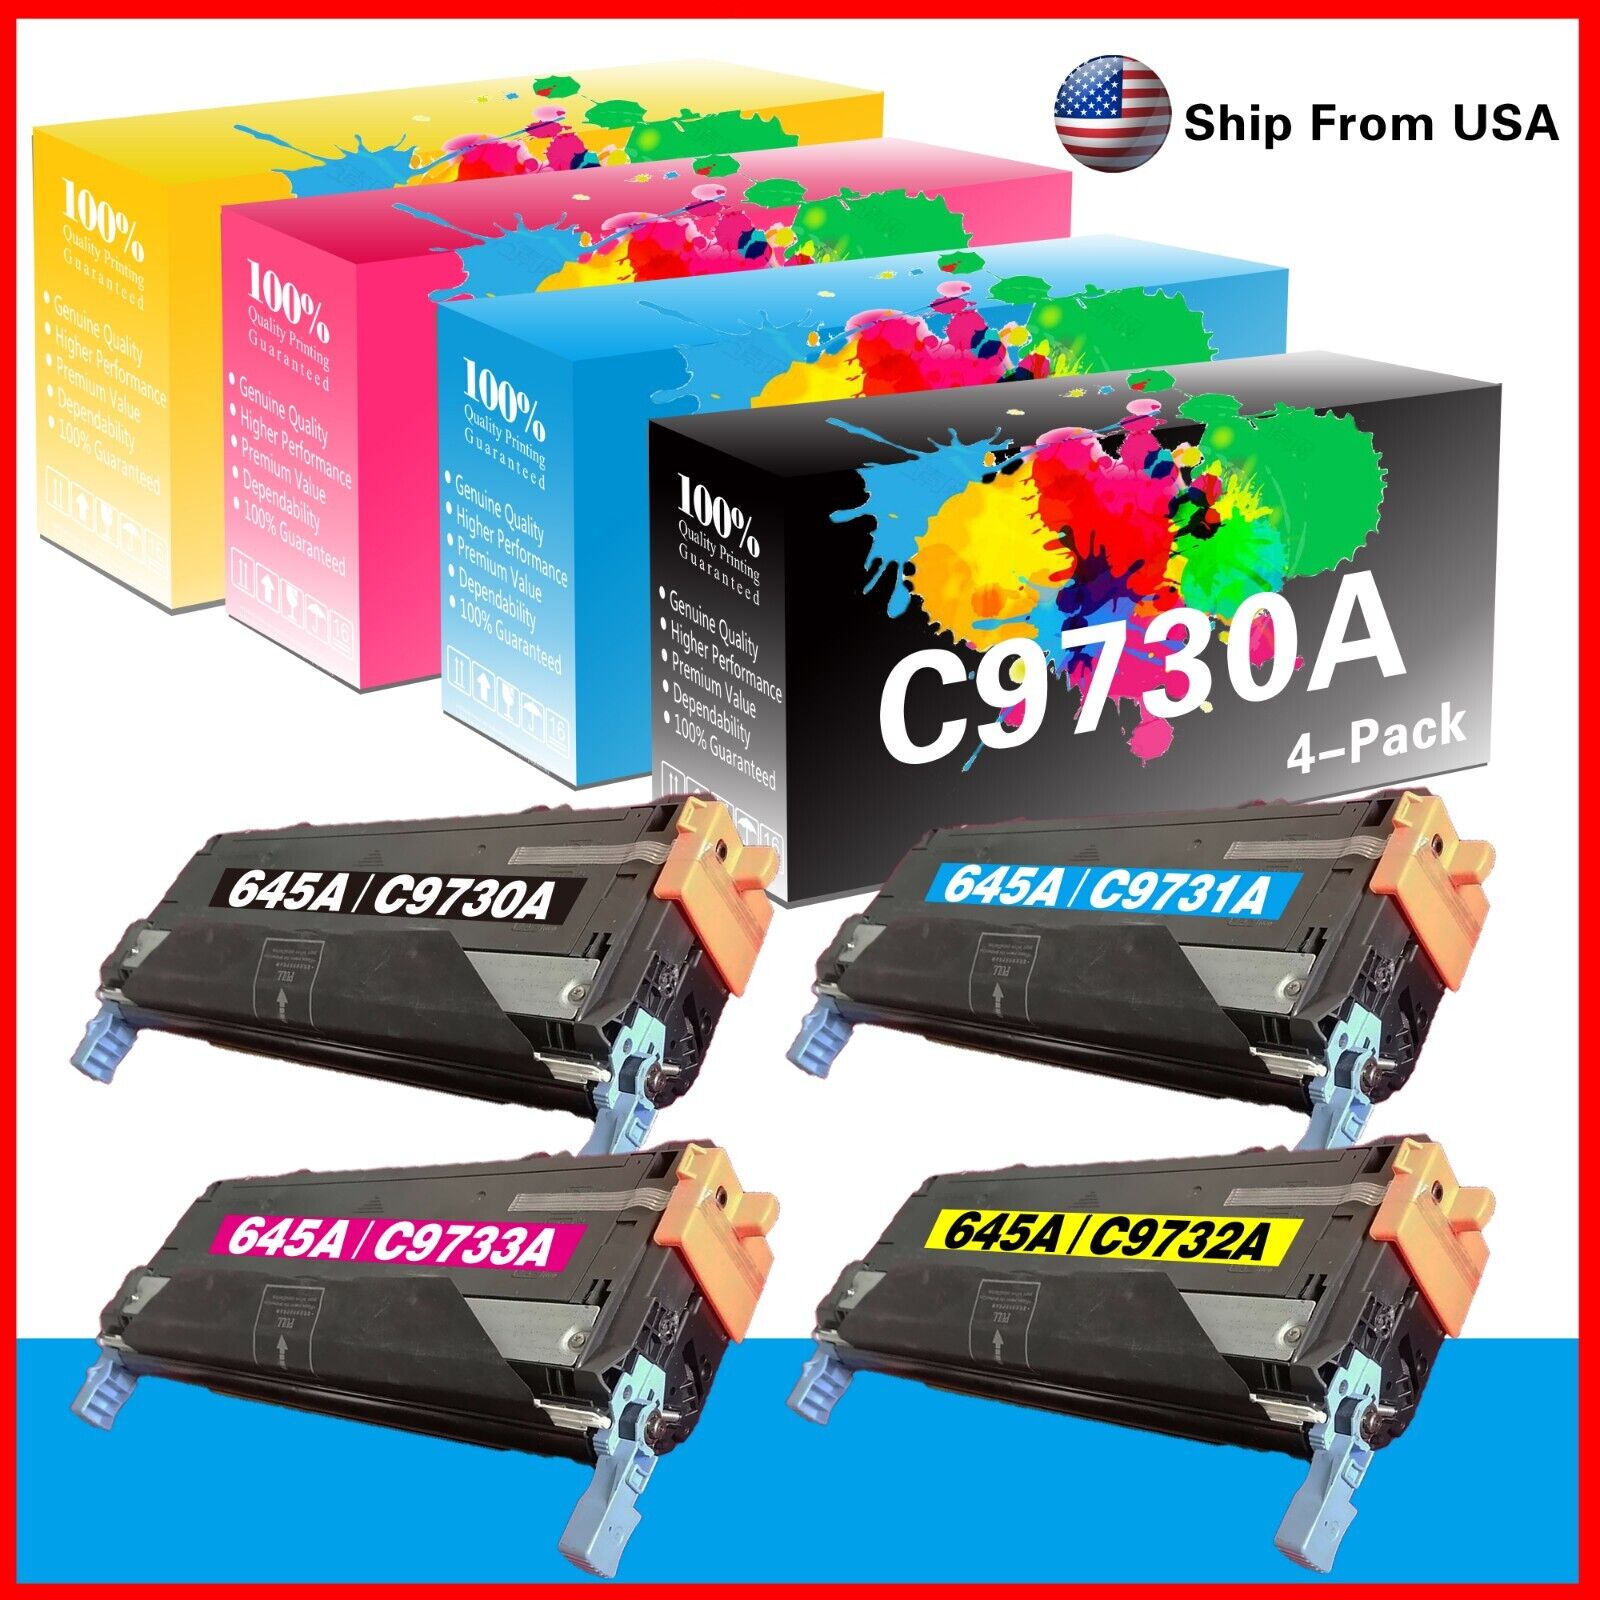 4PK 9730 C9730A Toner Cartridge Used For Color LaserJet 5500 5500n Printer